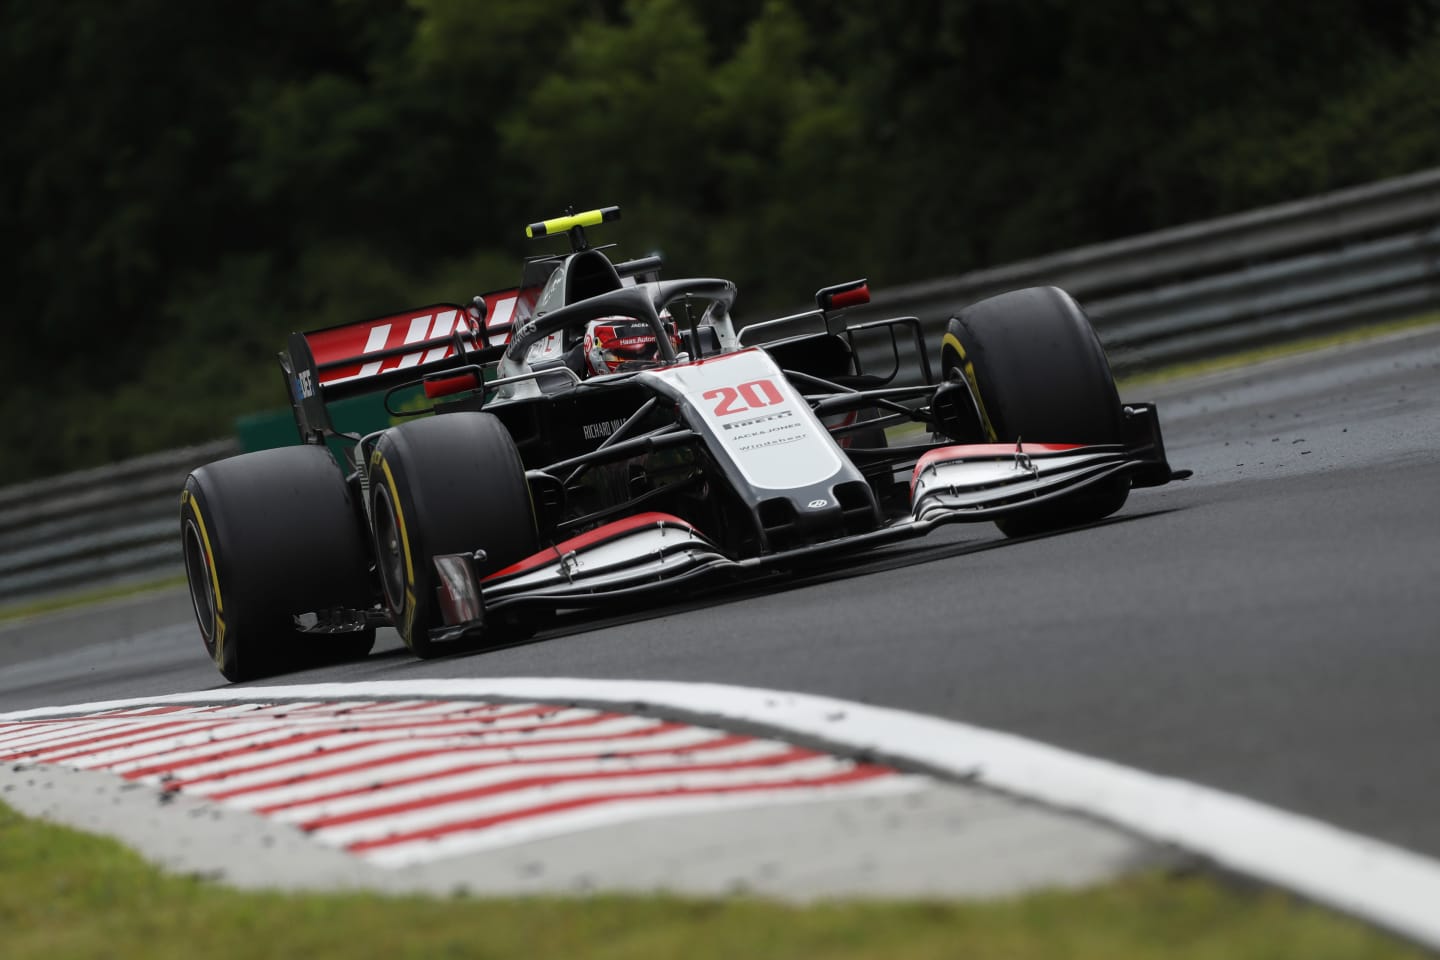 BUDAPEST, HUNGARY - JULY 19: Kevin Magnussen of Denmark driving the (20) Haas F1 Team VF-20 Ferrari